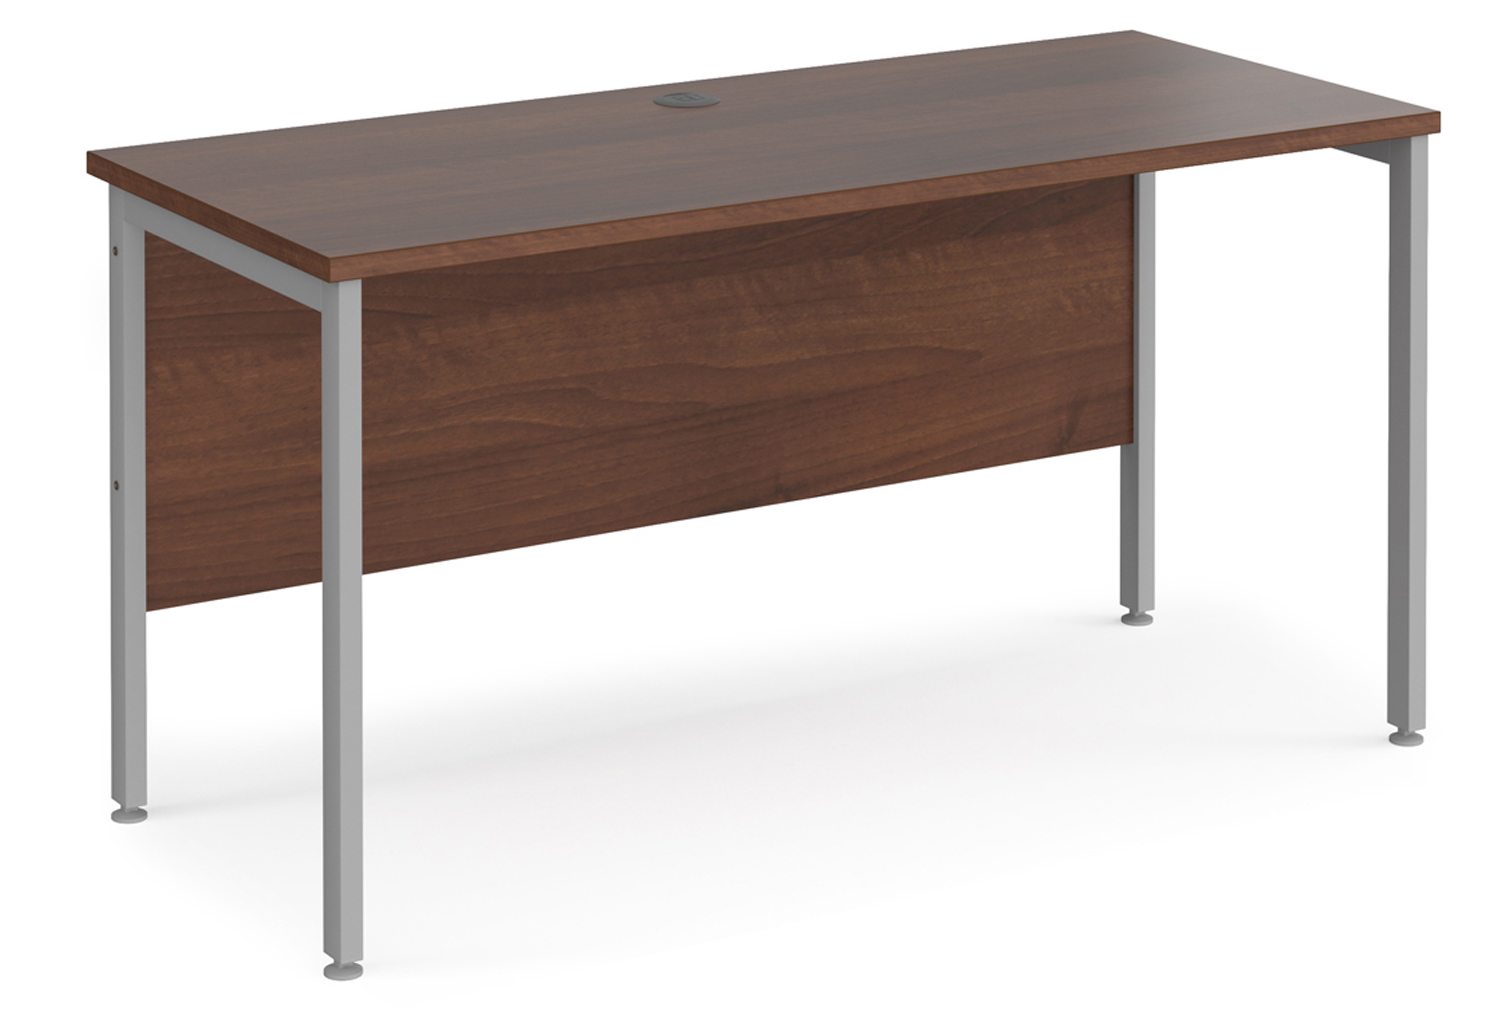 Value Line Deluxe H-Leg Narrow Rectangular Office Desk (Silver Legs), 140wx60dx73h (cm), Walnut